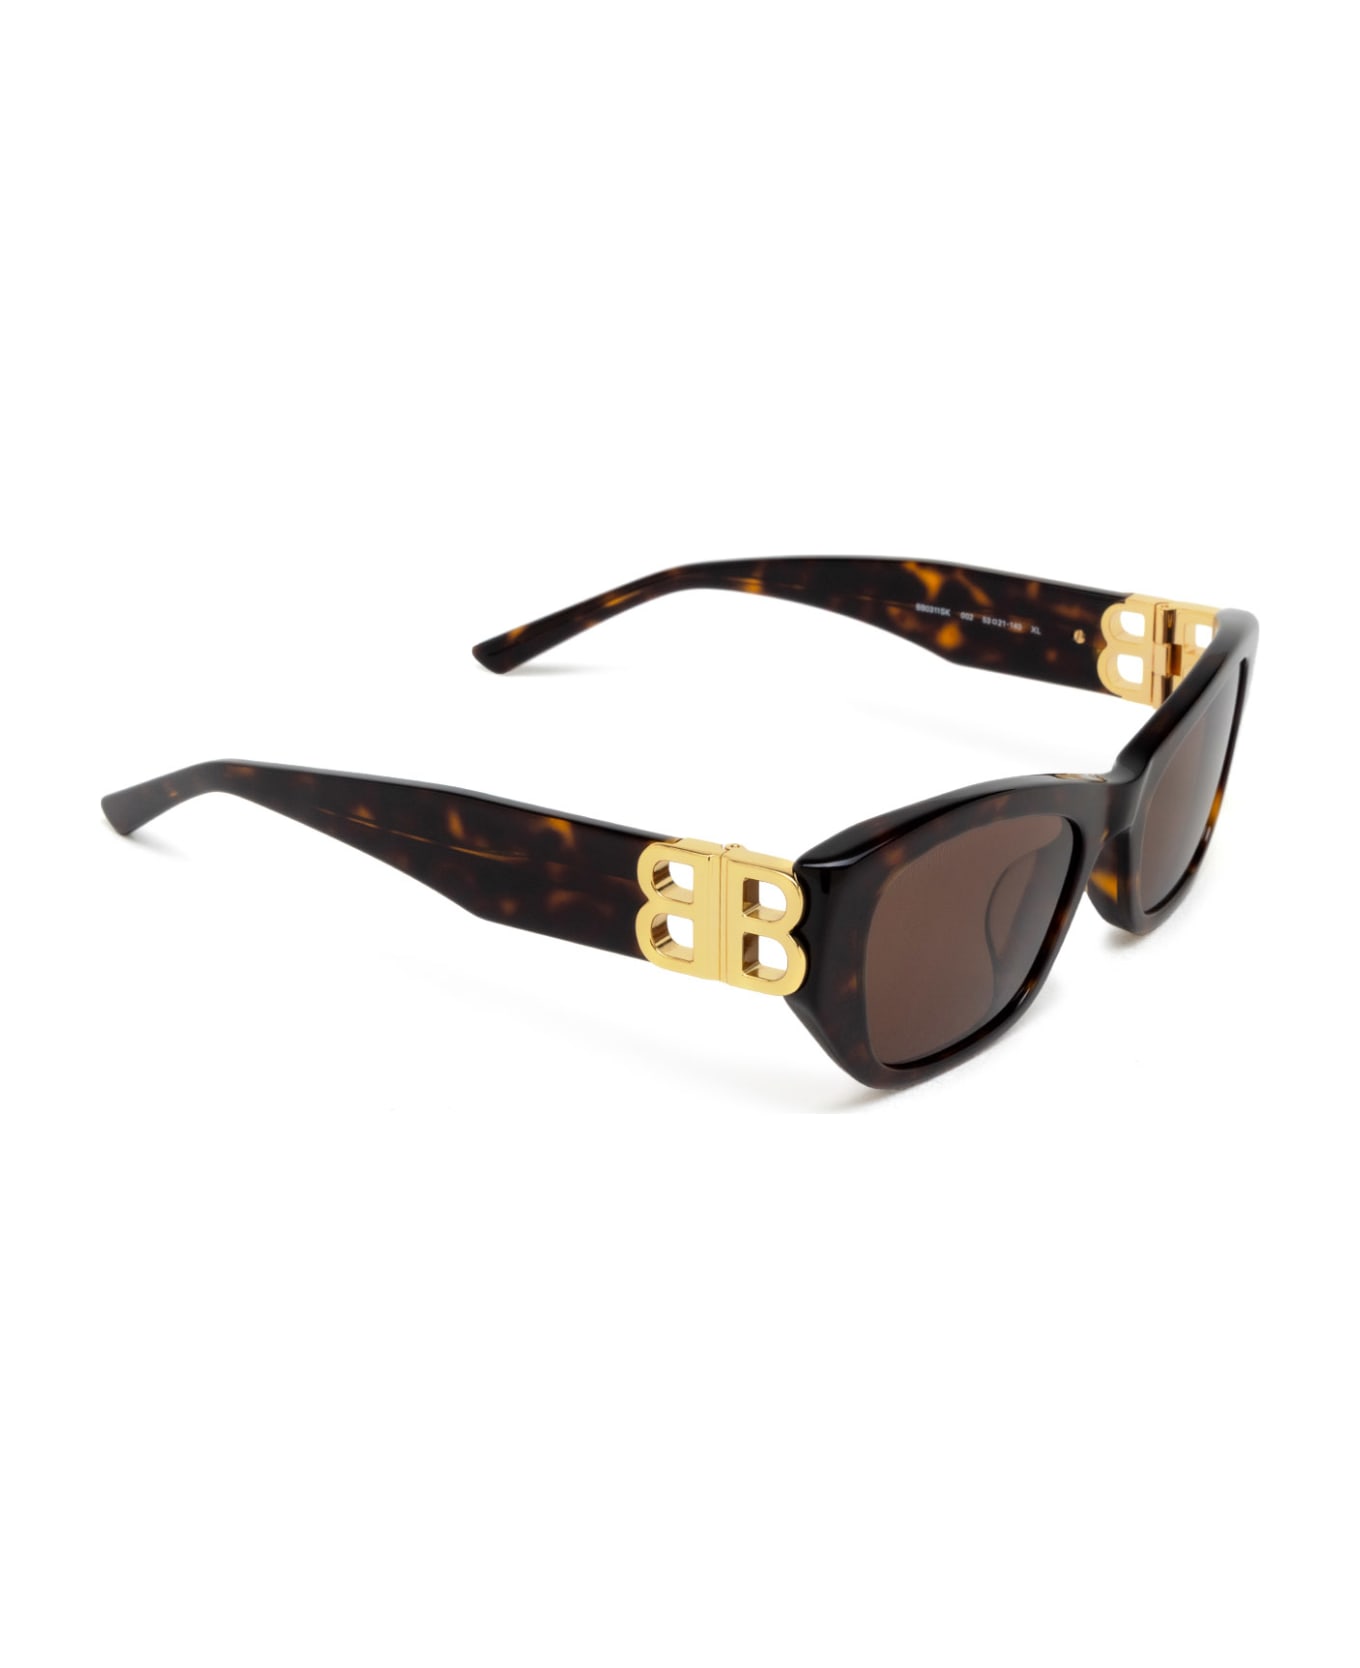 Balenciaga Eyewear Rectangular Frame Sunglasses Sunglasses - Tortoise